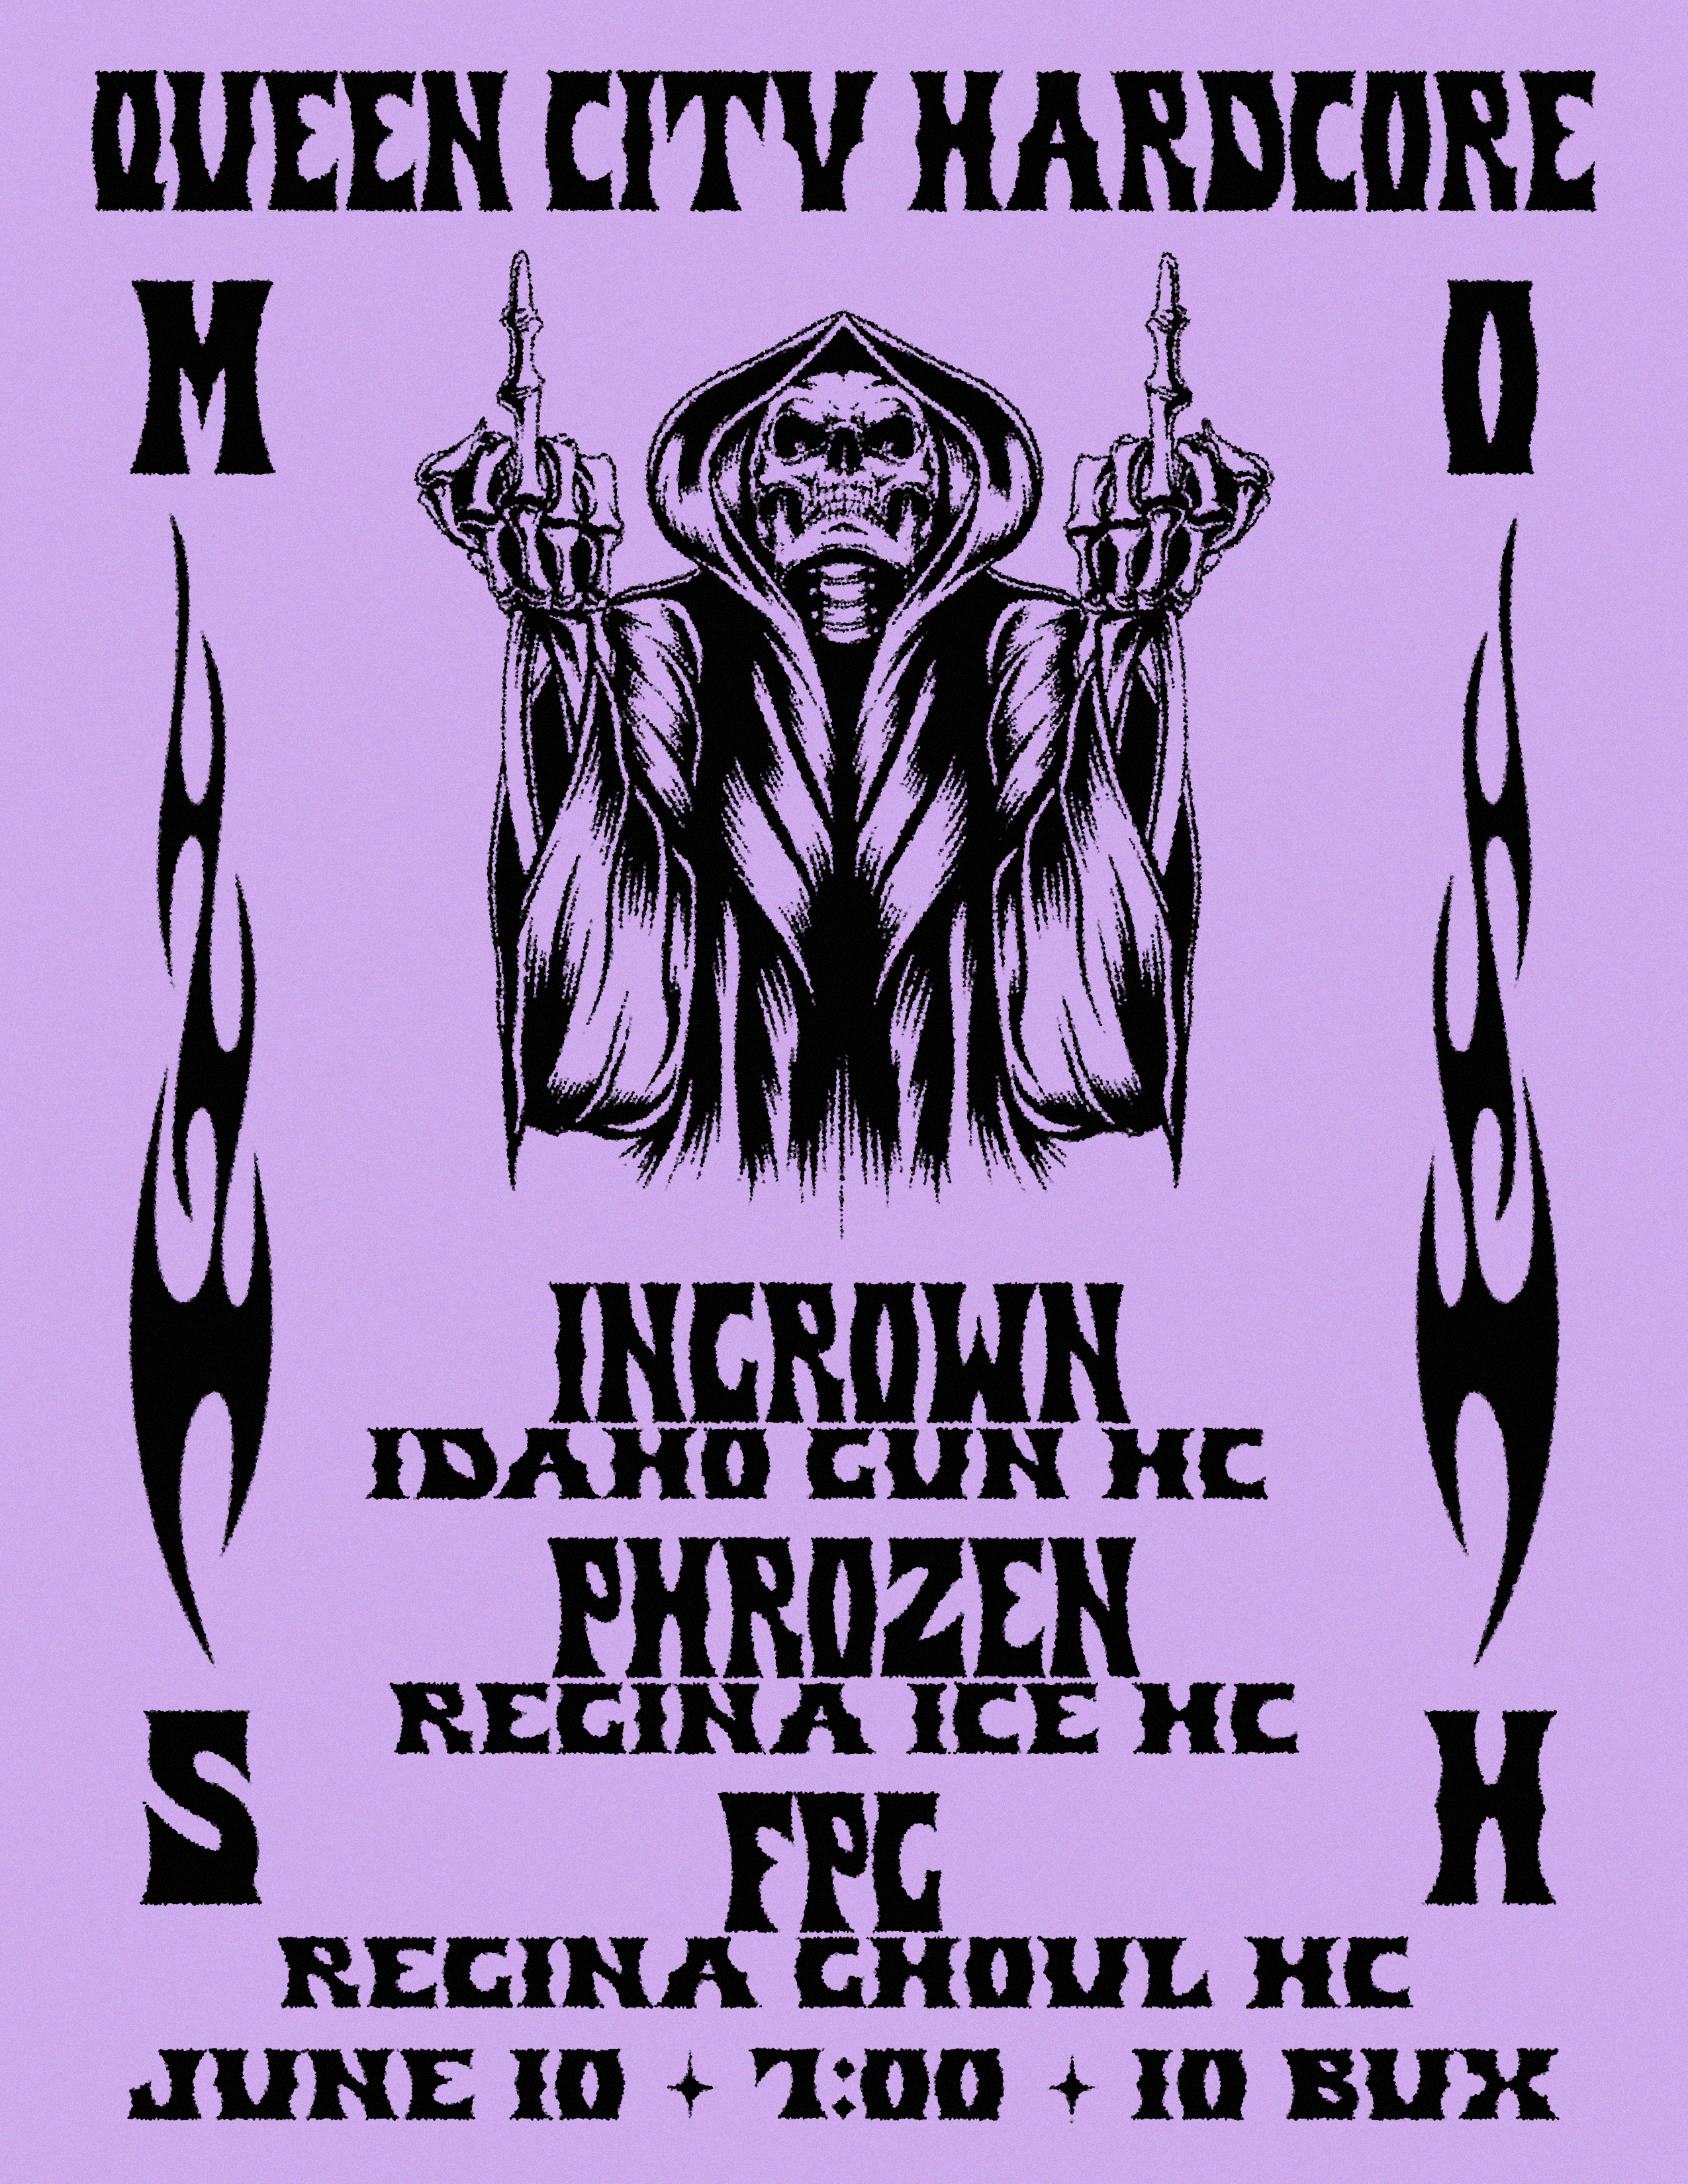 Q.C.H.C. Presents: Ingrown, Phrozen, FPG